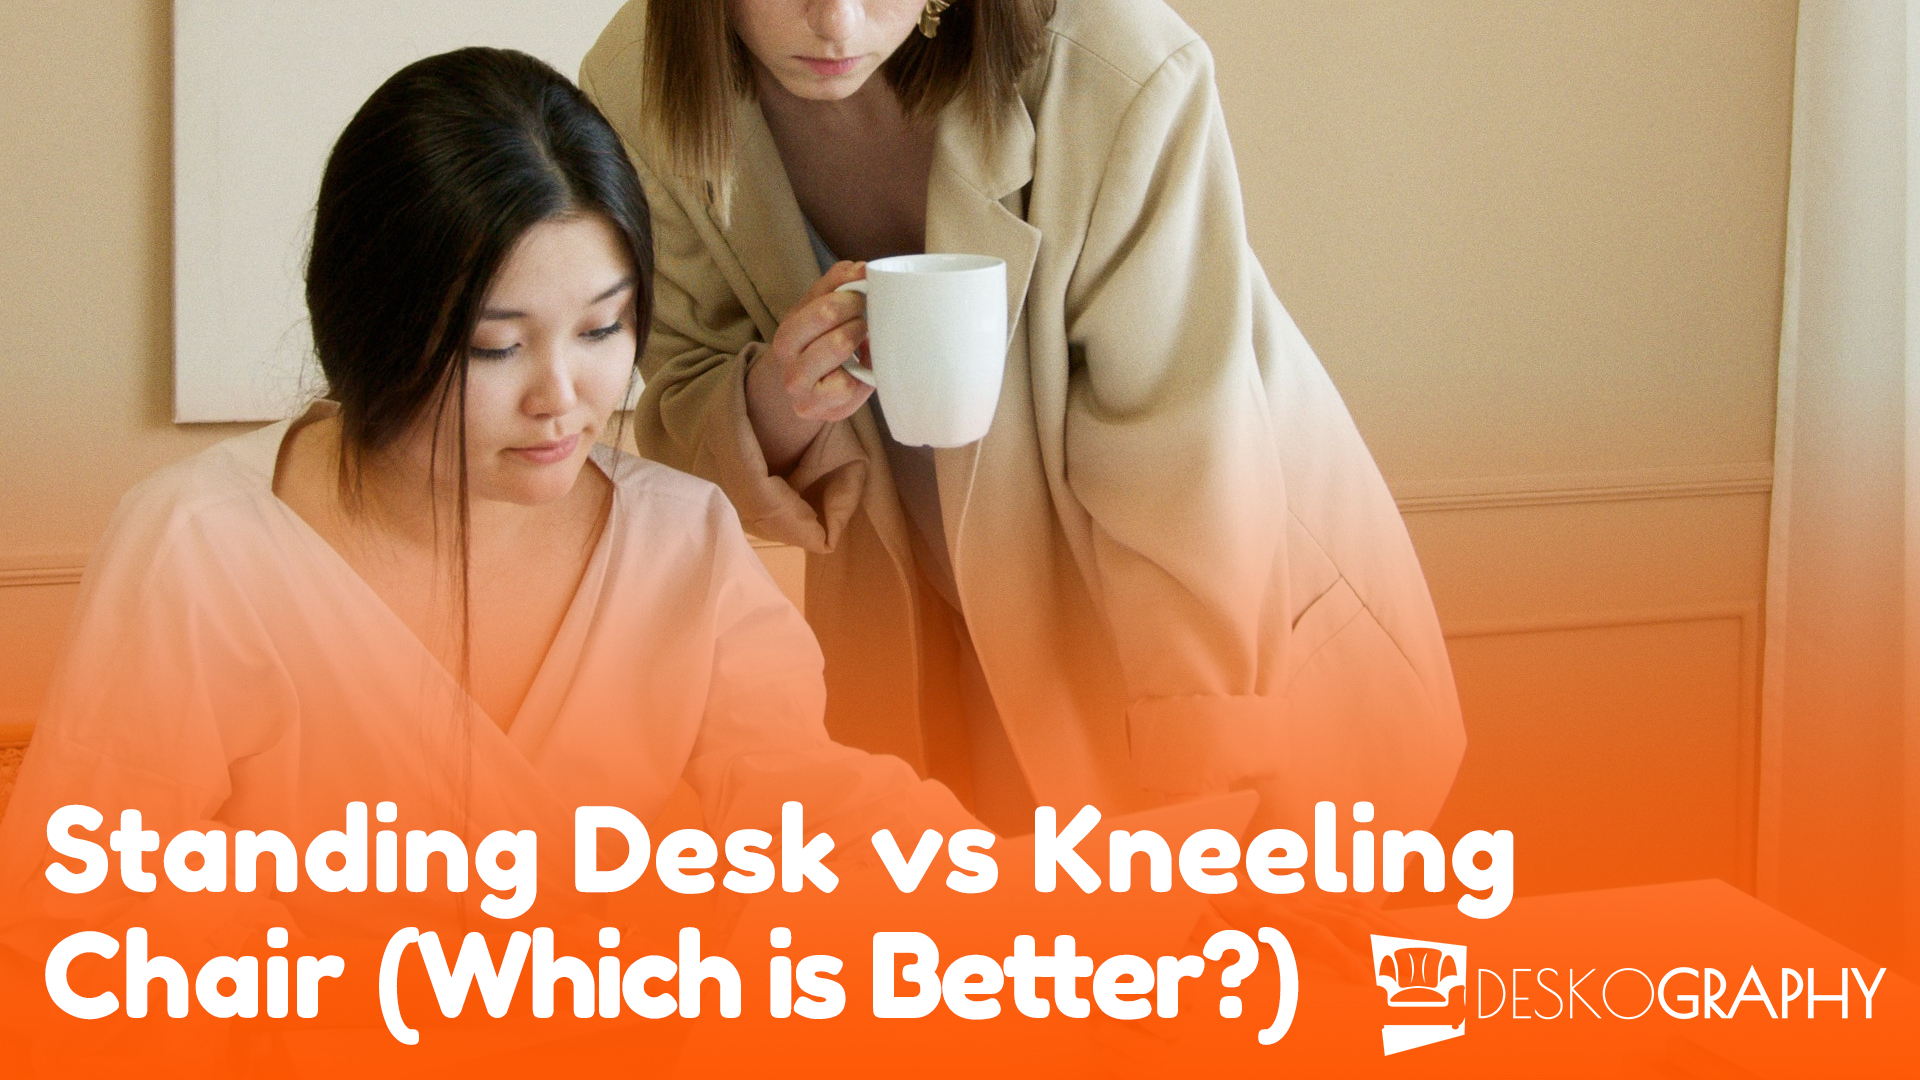 Standing desk vs kneeling chair